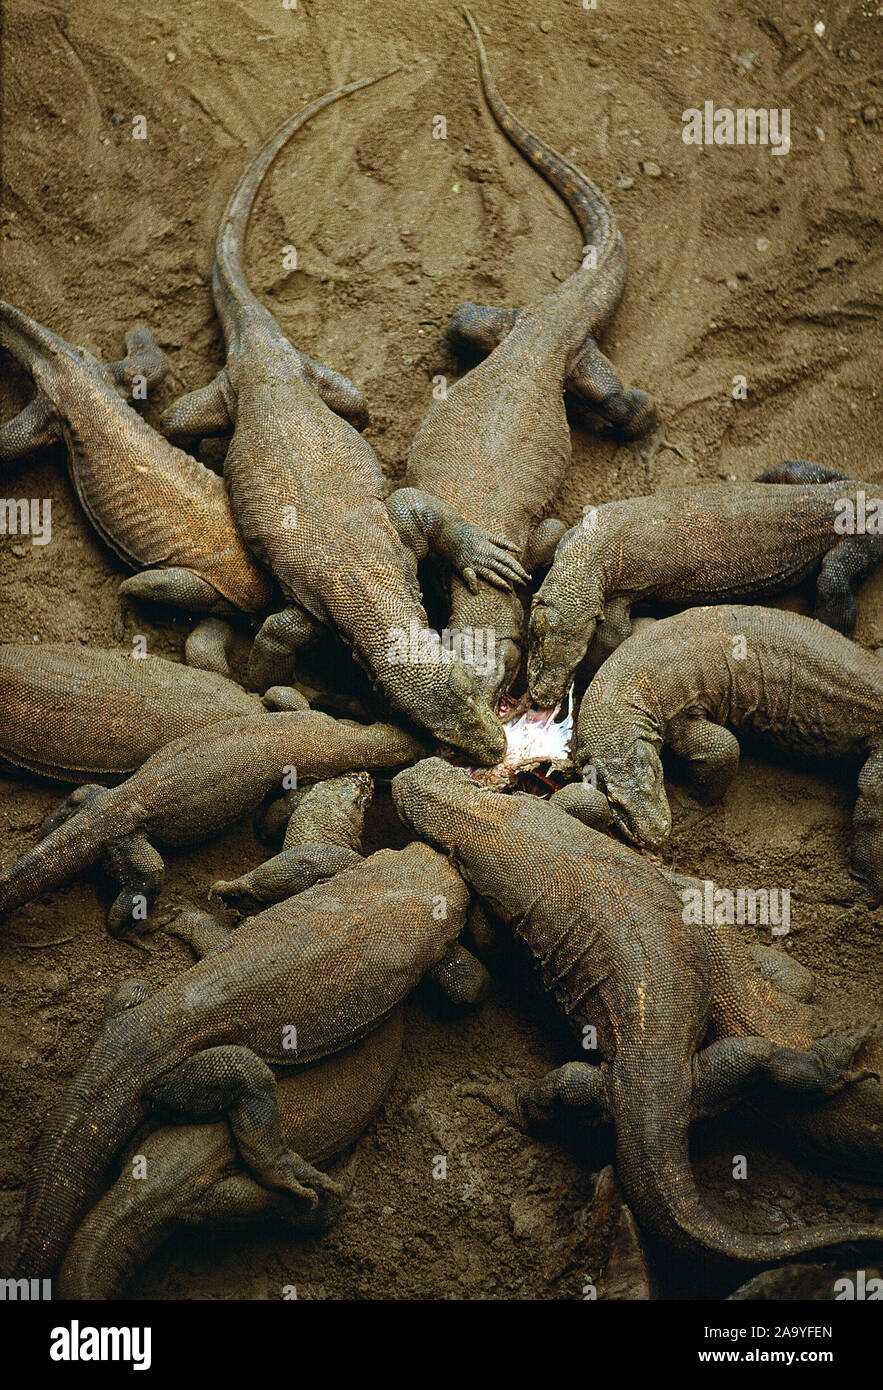 Indonesia. Komodo Island. Wildlife. Komodo Dragons in feeding frenzy. Stock Photo